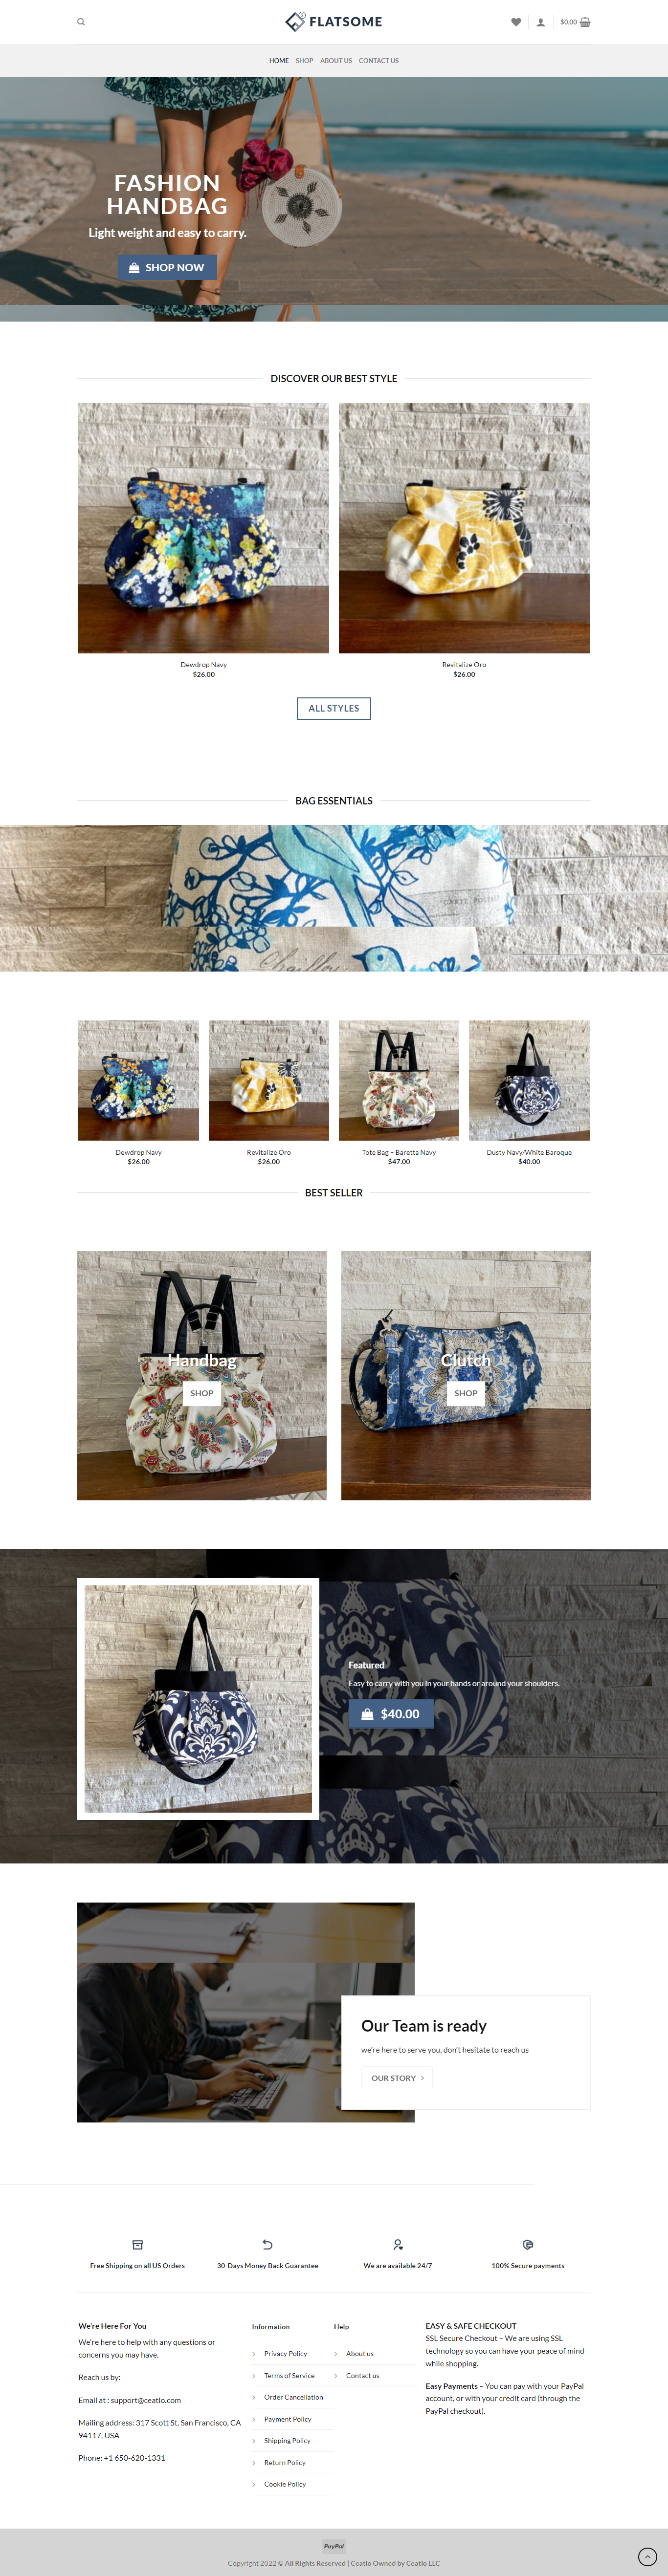 Fashion HandBags - Landing Page - Flatsome Theme Online Store